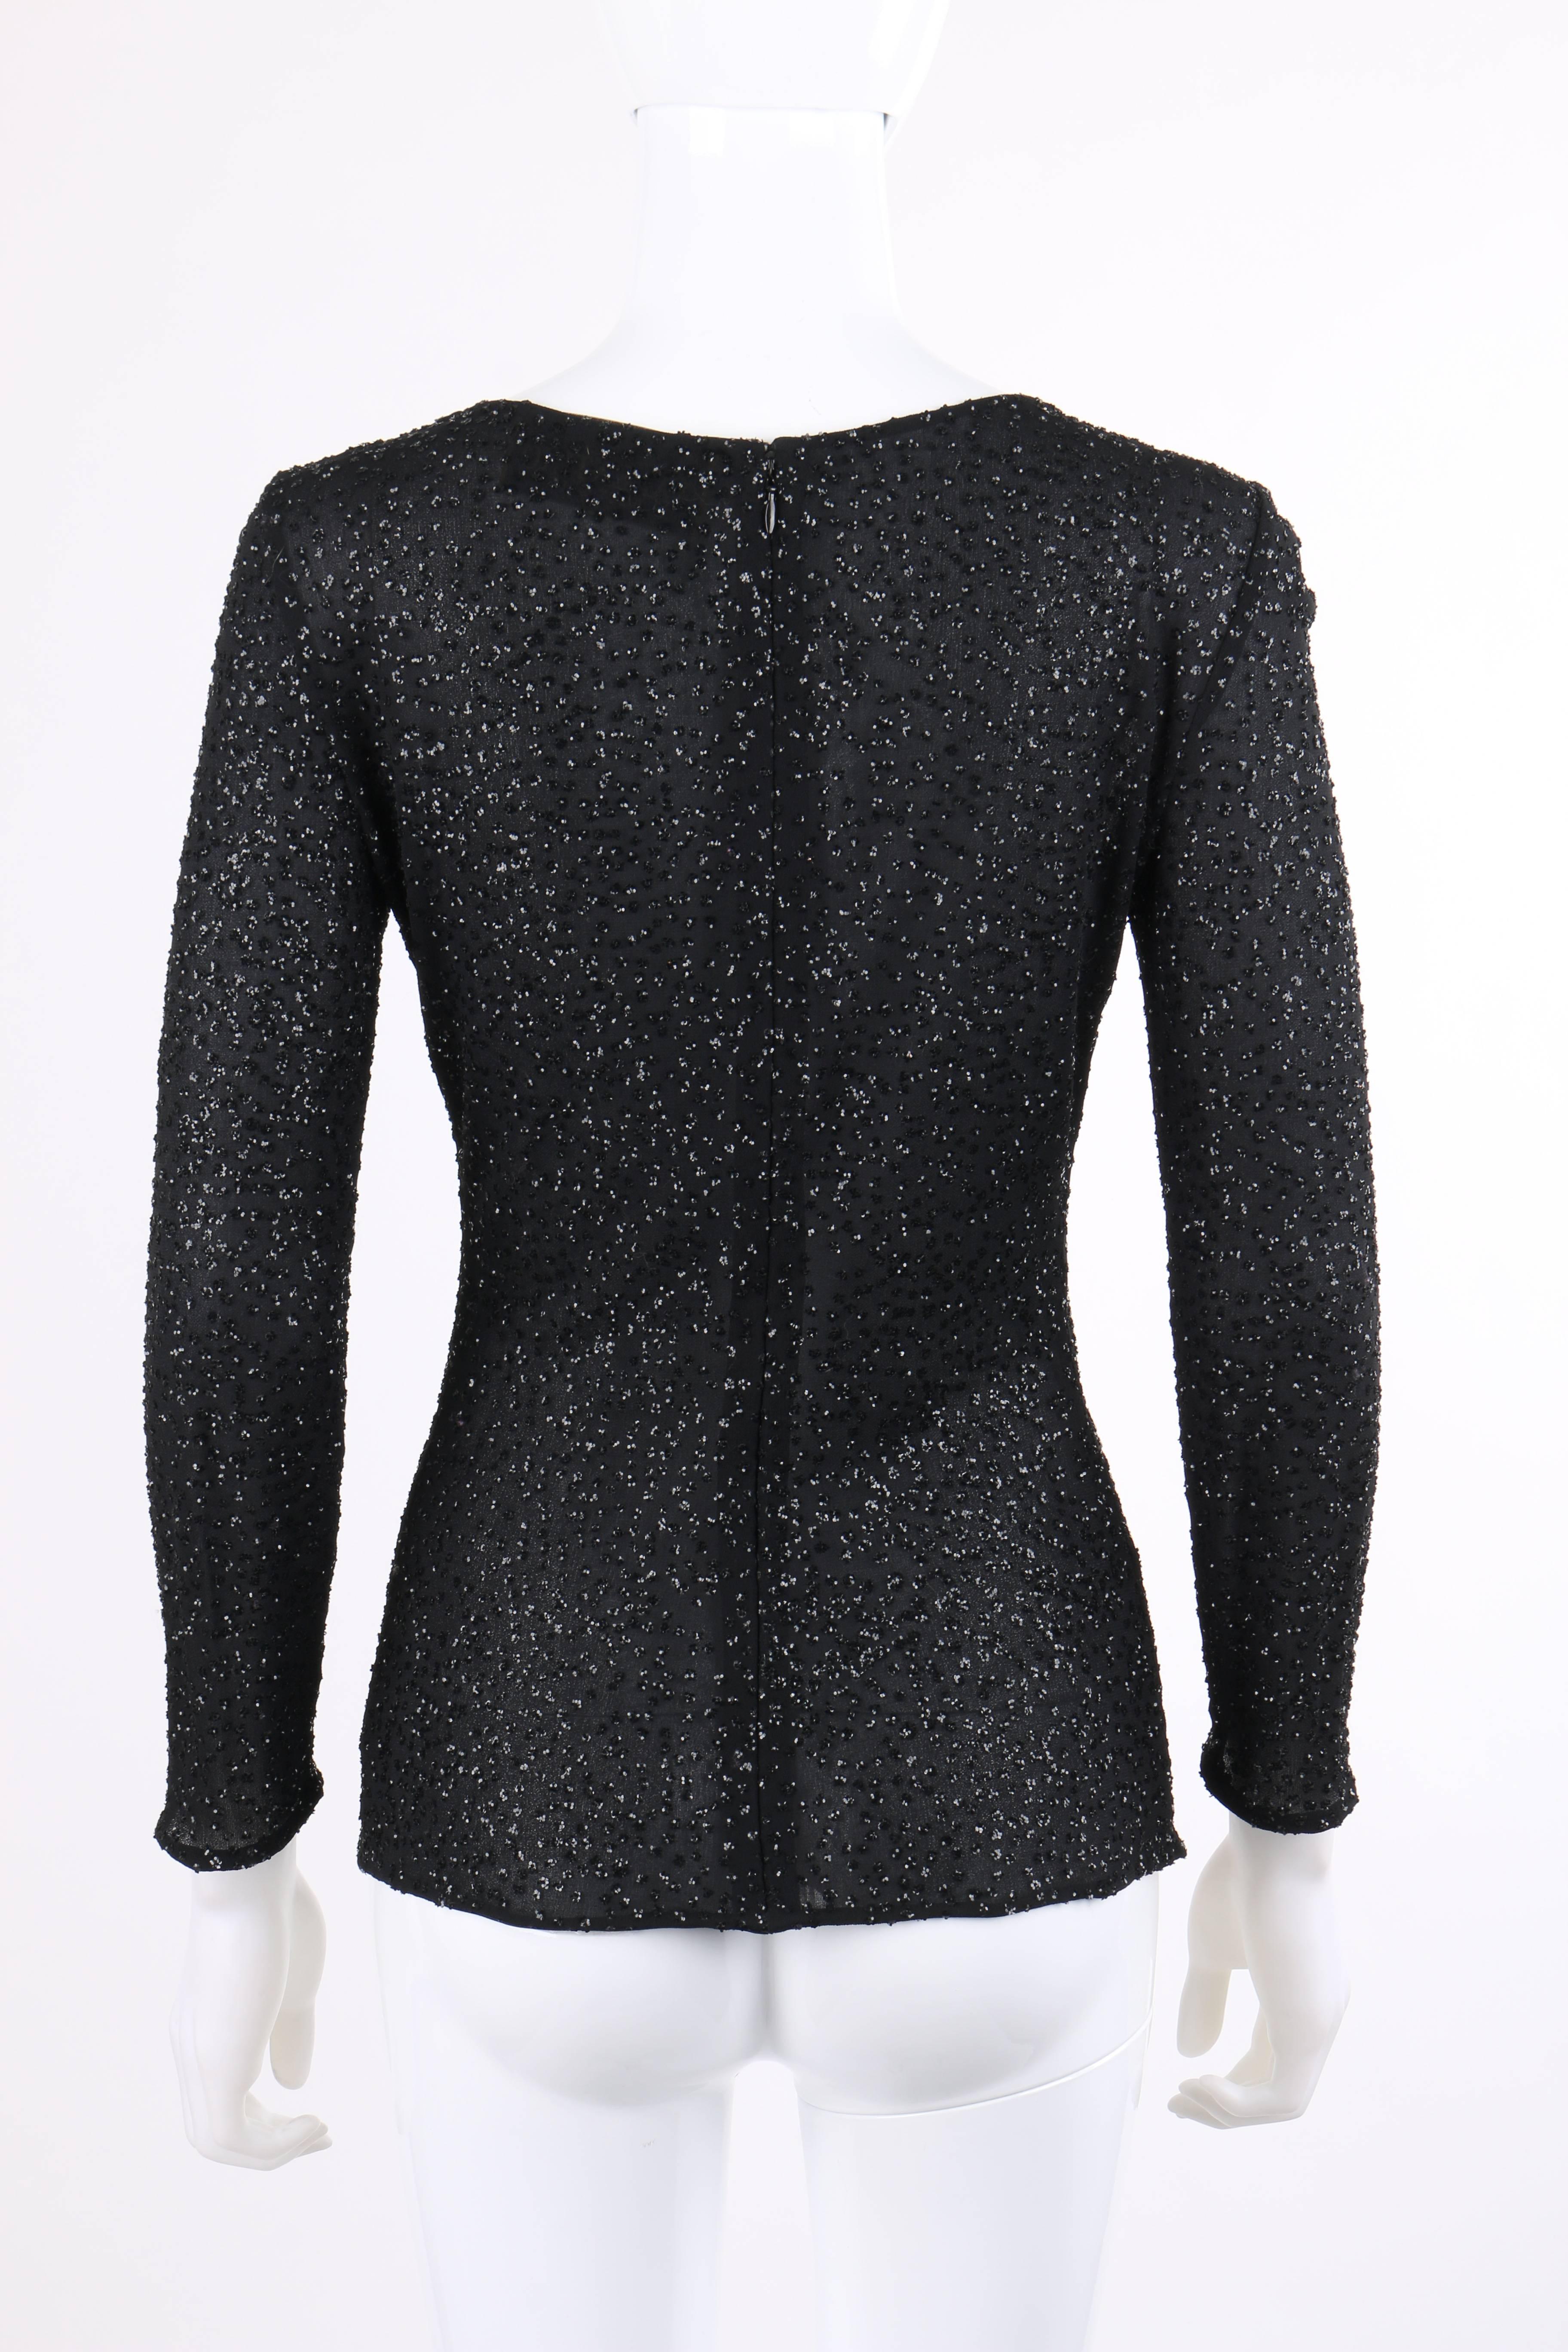 Women's VALENTINO Boutique A/W 2000 Black Metallic Sequin Knit Scoop Neck Top For Sale